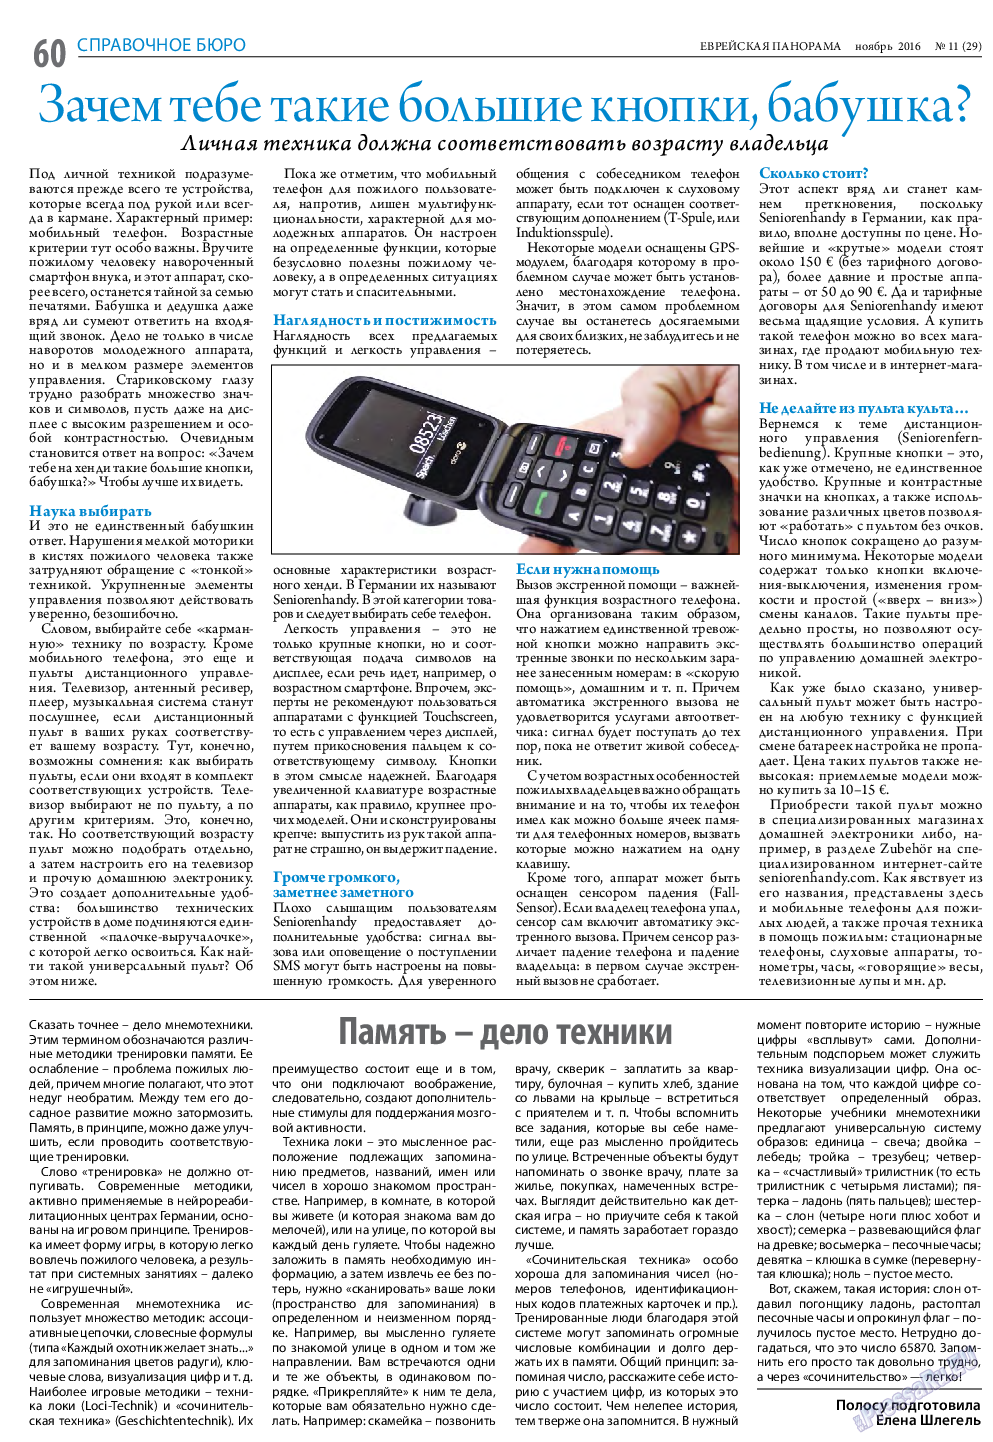 Еврейская панорама, газета. 2016 №11 стр.60